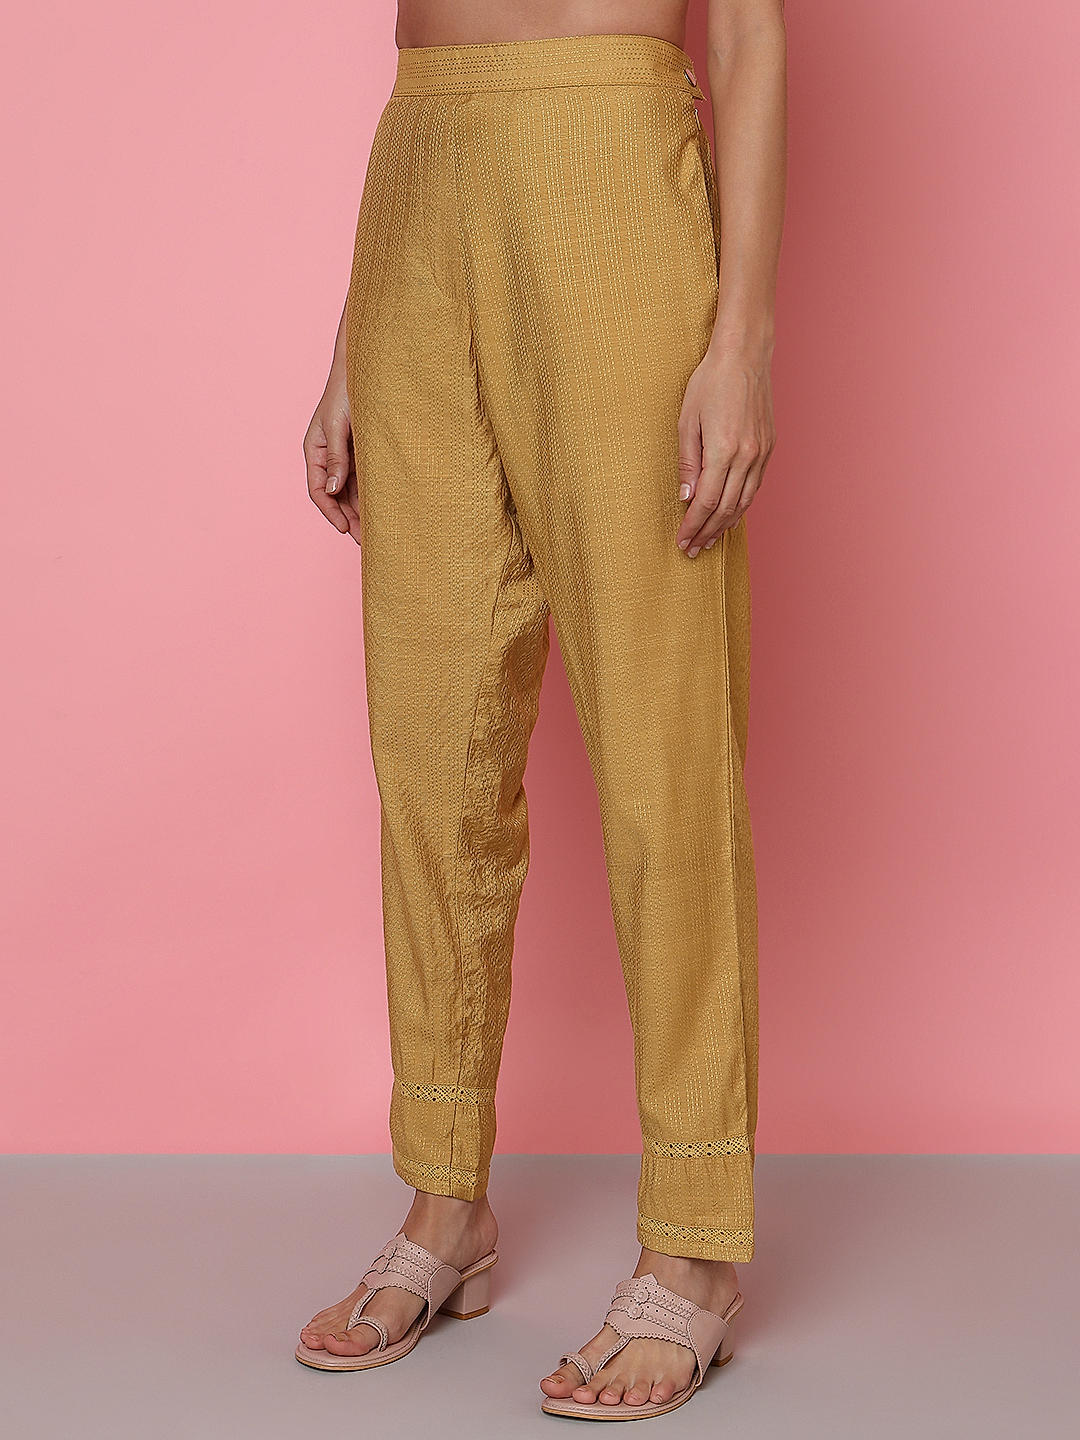 Buy Beige Front Short Back Long Digital Printed SuitWith Golden Pants  Online - Kalki Fashion